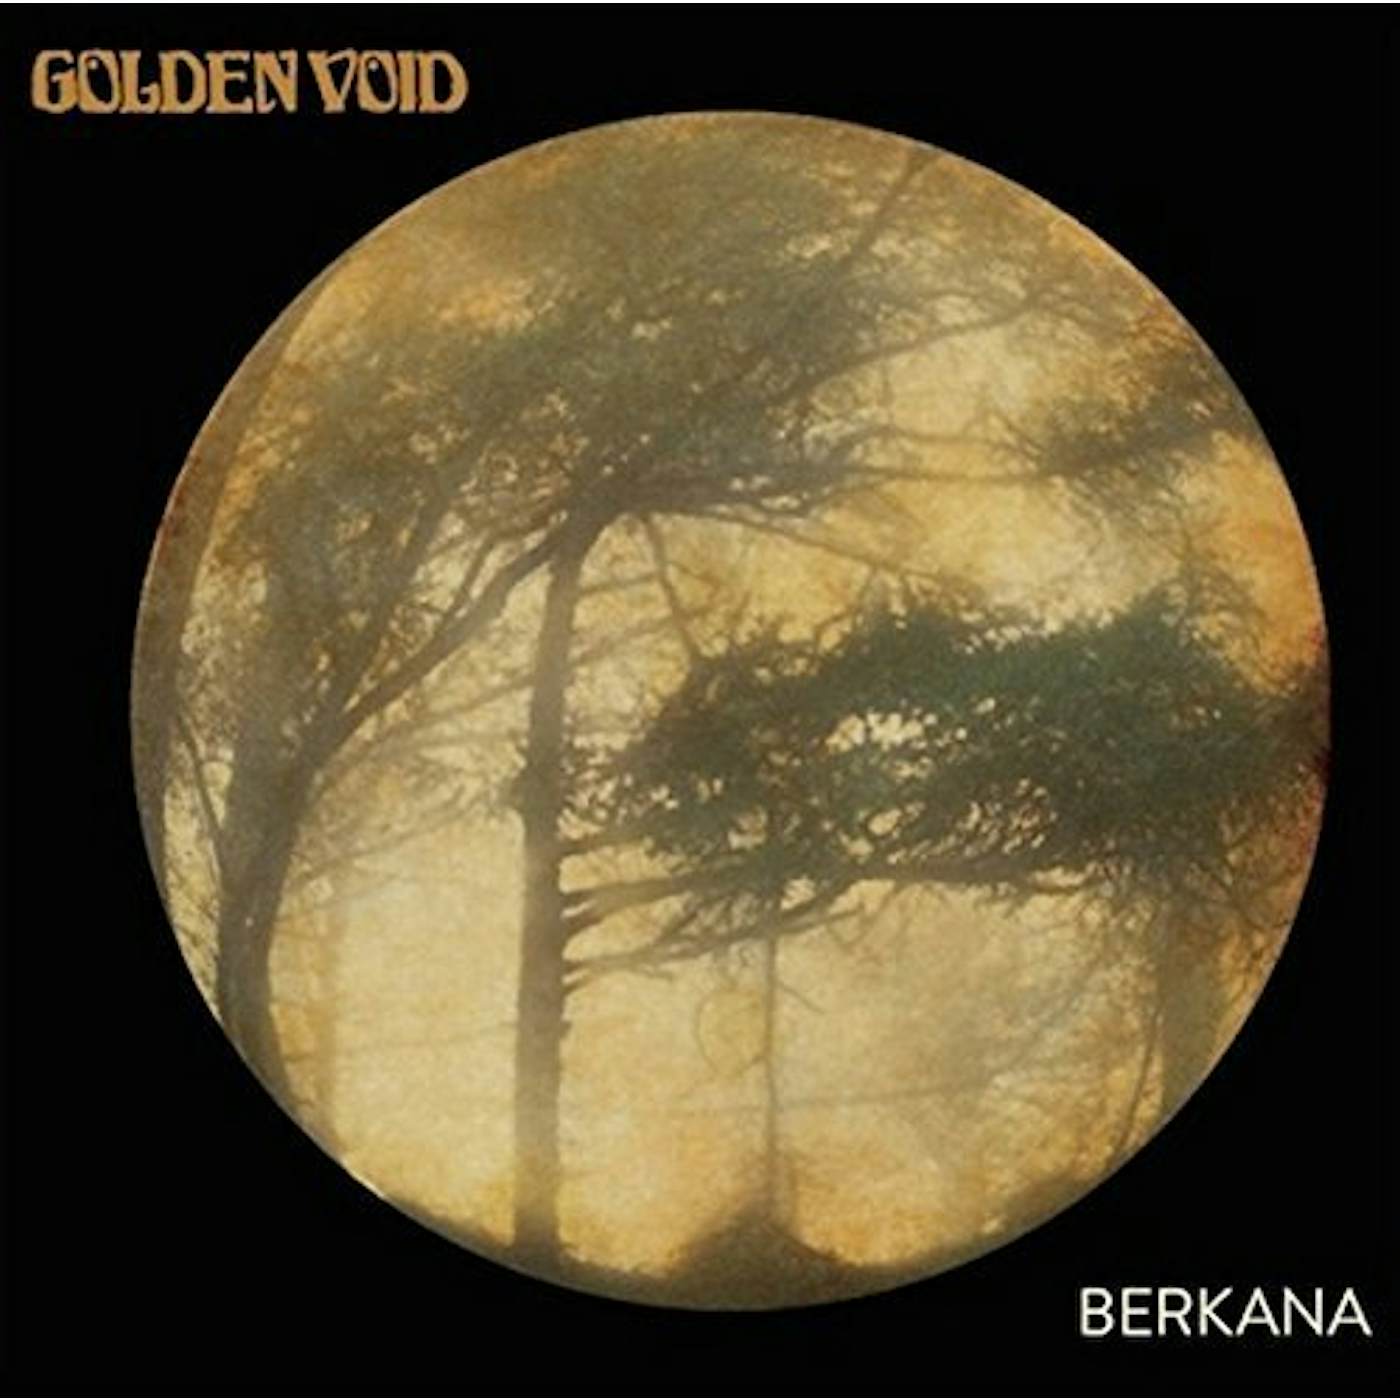 Golden Void Berkana Vinyl Record